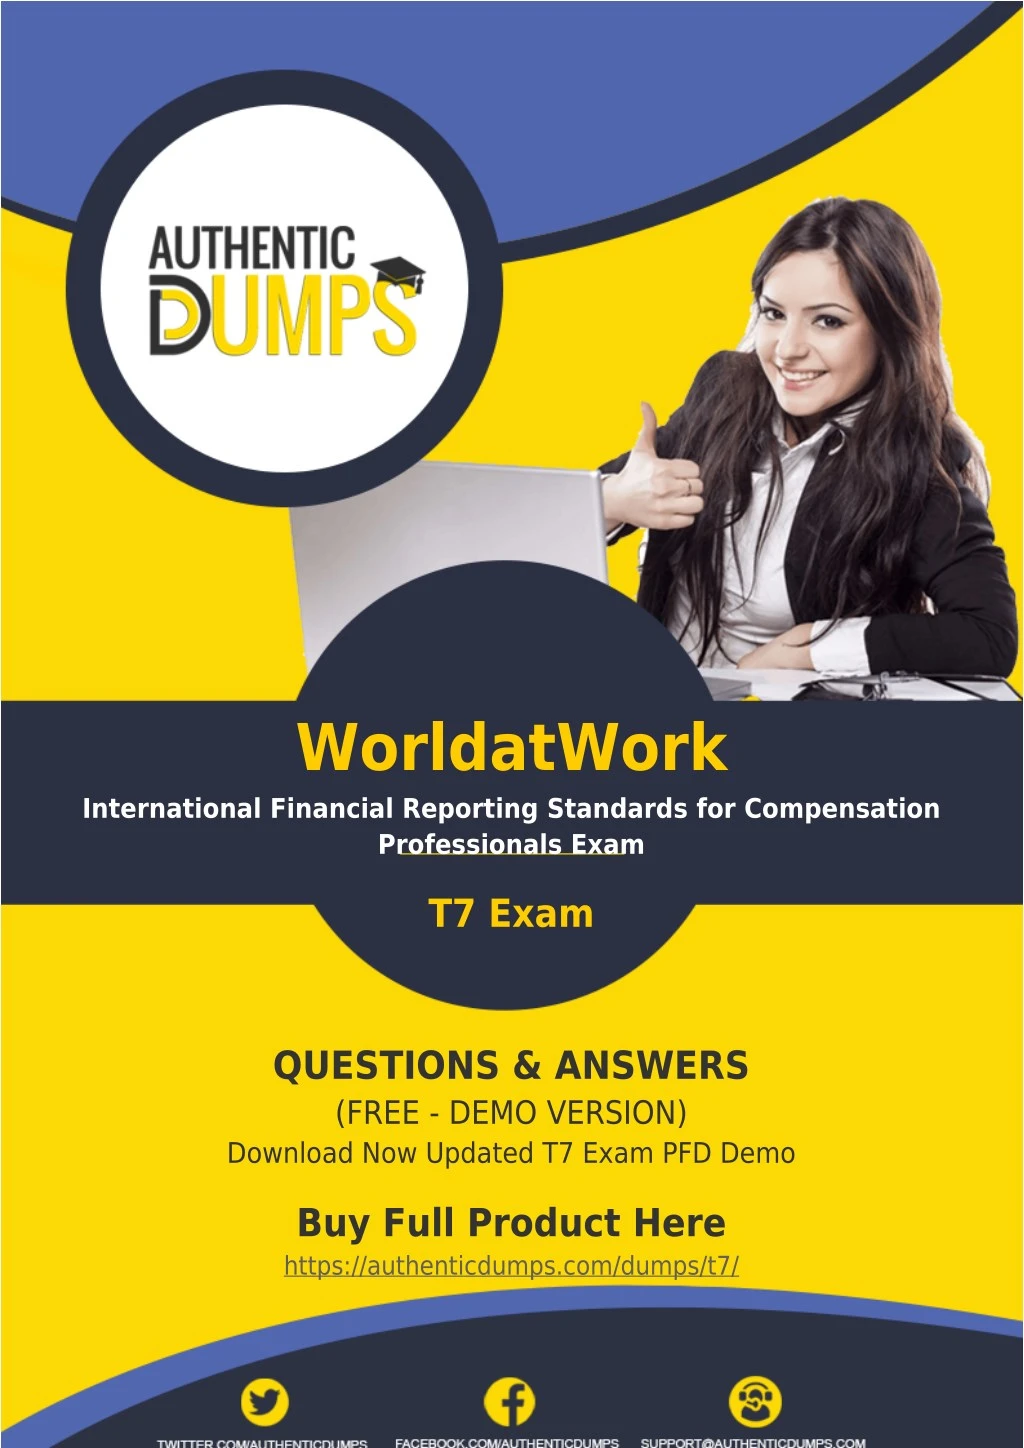 worldatwork international financial reporting